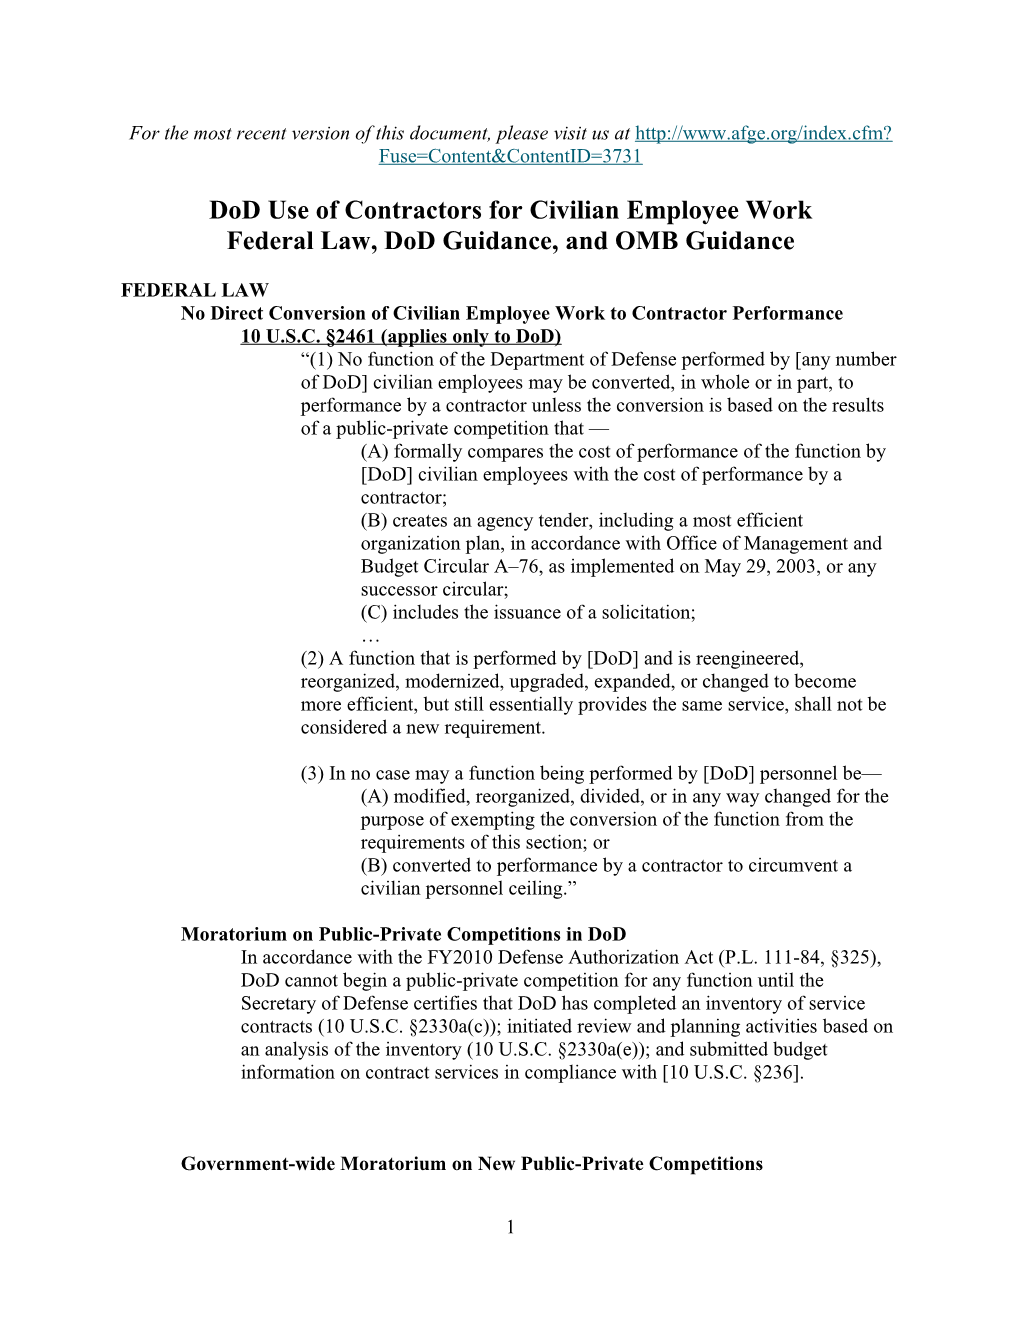 Doduse of Contractors for Civilian Employee Work